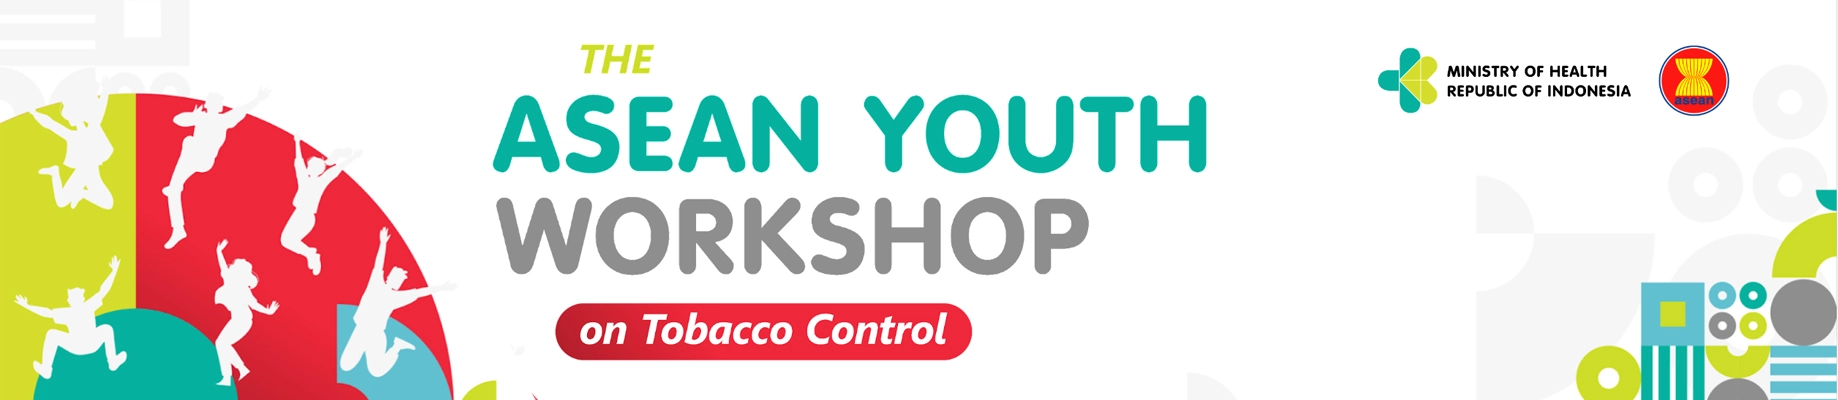 ASEAN Youth Workshop on Tobacco Control Digital Media Campaign